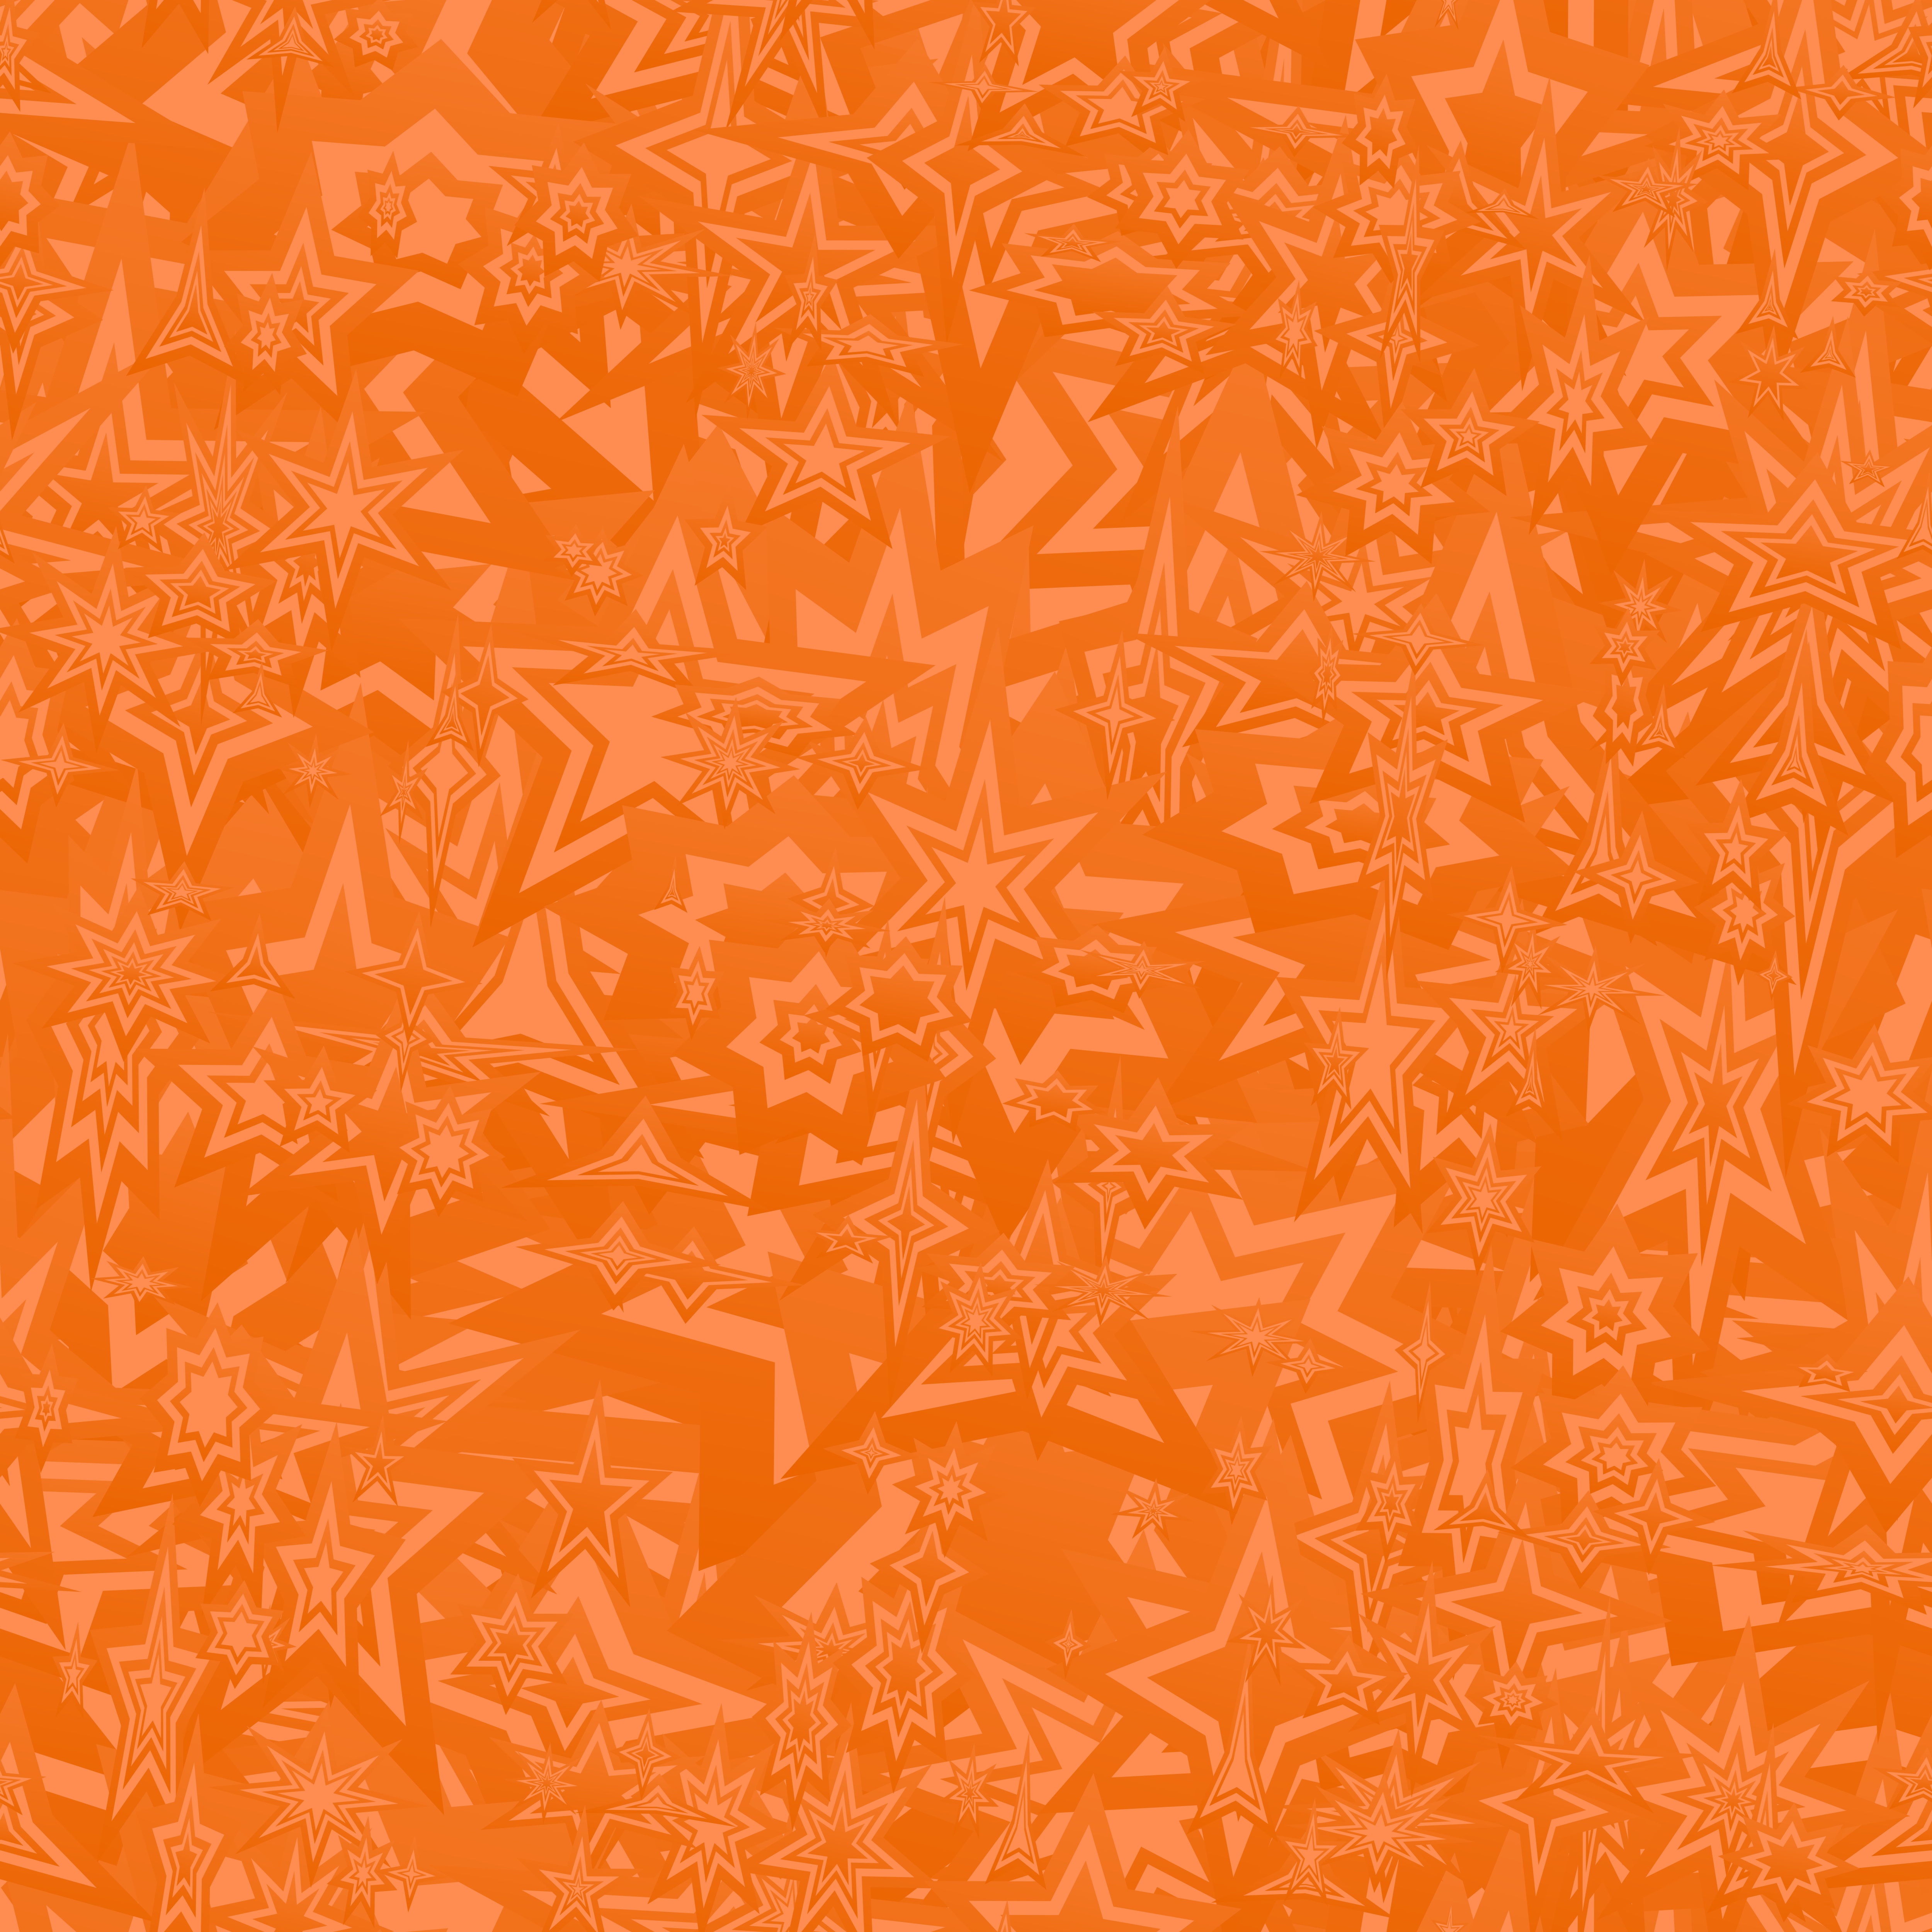 Orange Chaotic Wallpaper Pattern 763788 Fond D écran